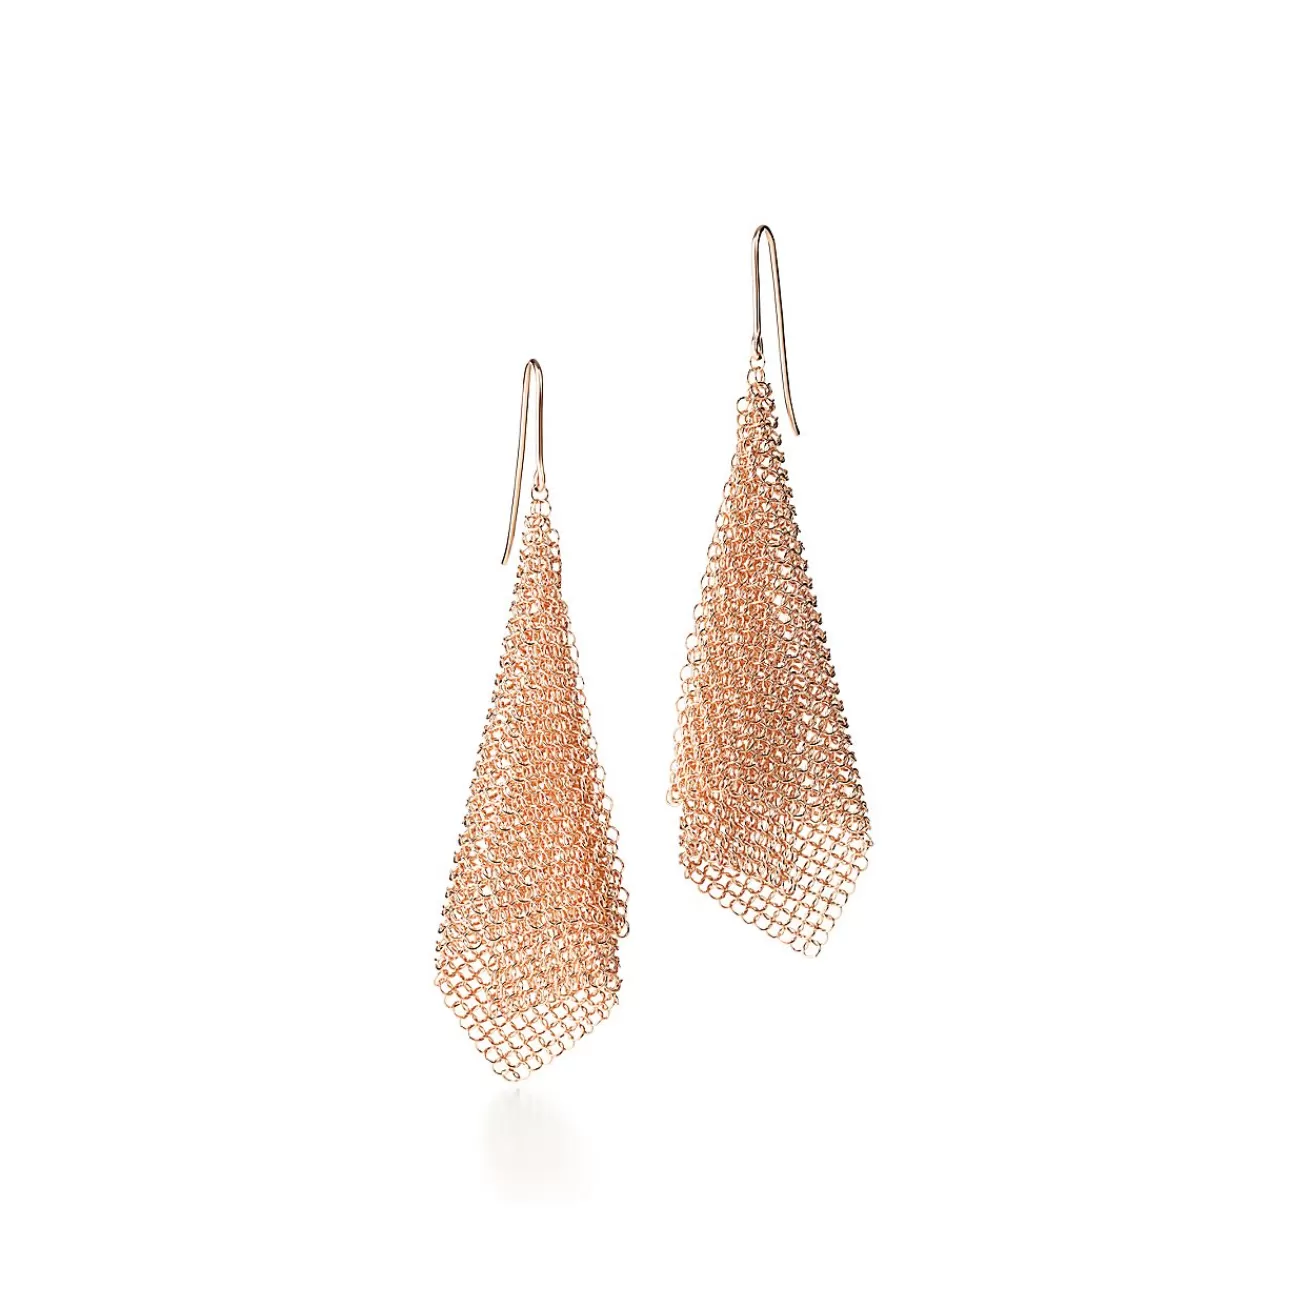 Tiffany & Co. Elsa Peretti® Mesh earrings in 18k rose gold, small. | ^ Earrings | Rose Gold Jewelry